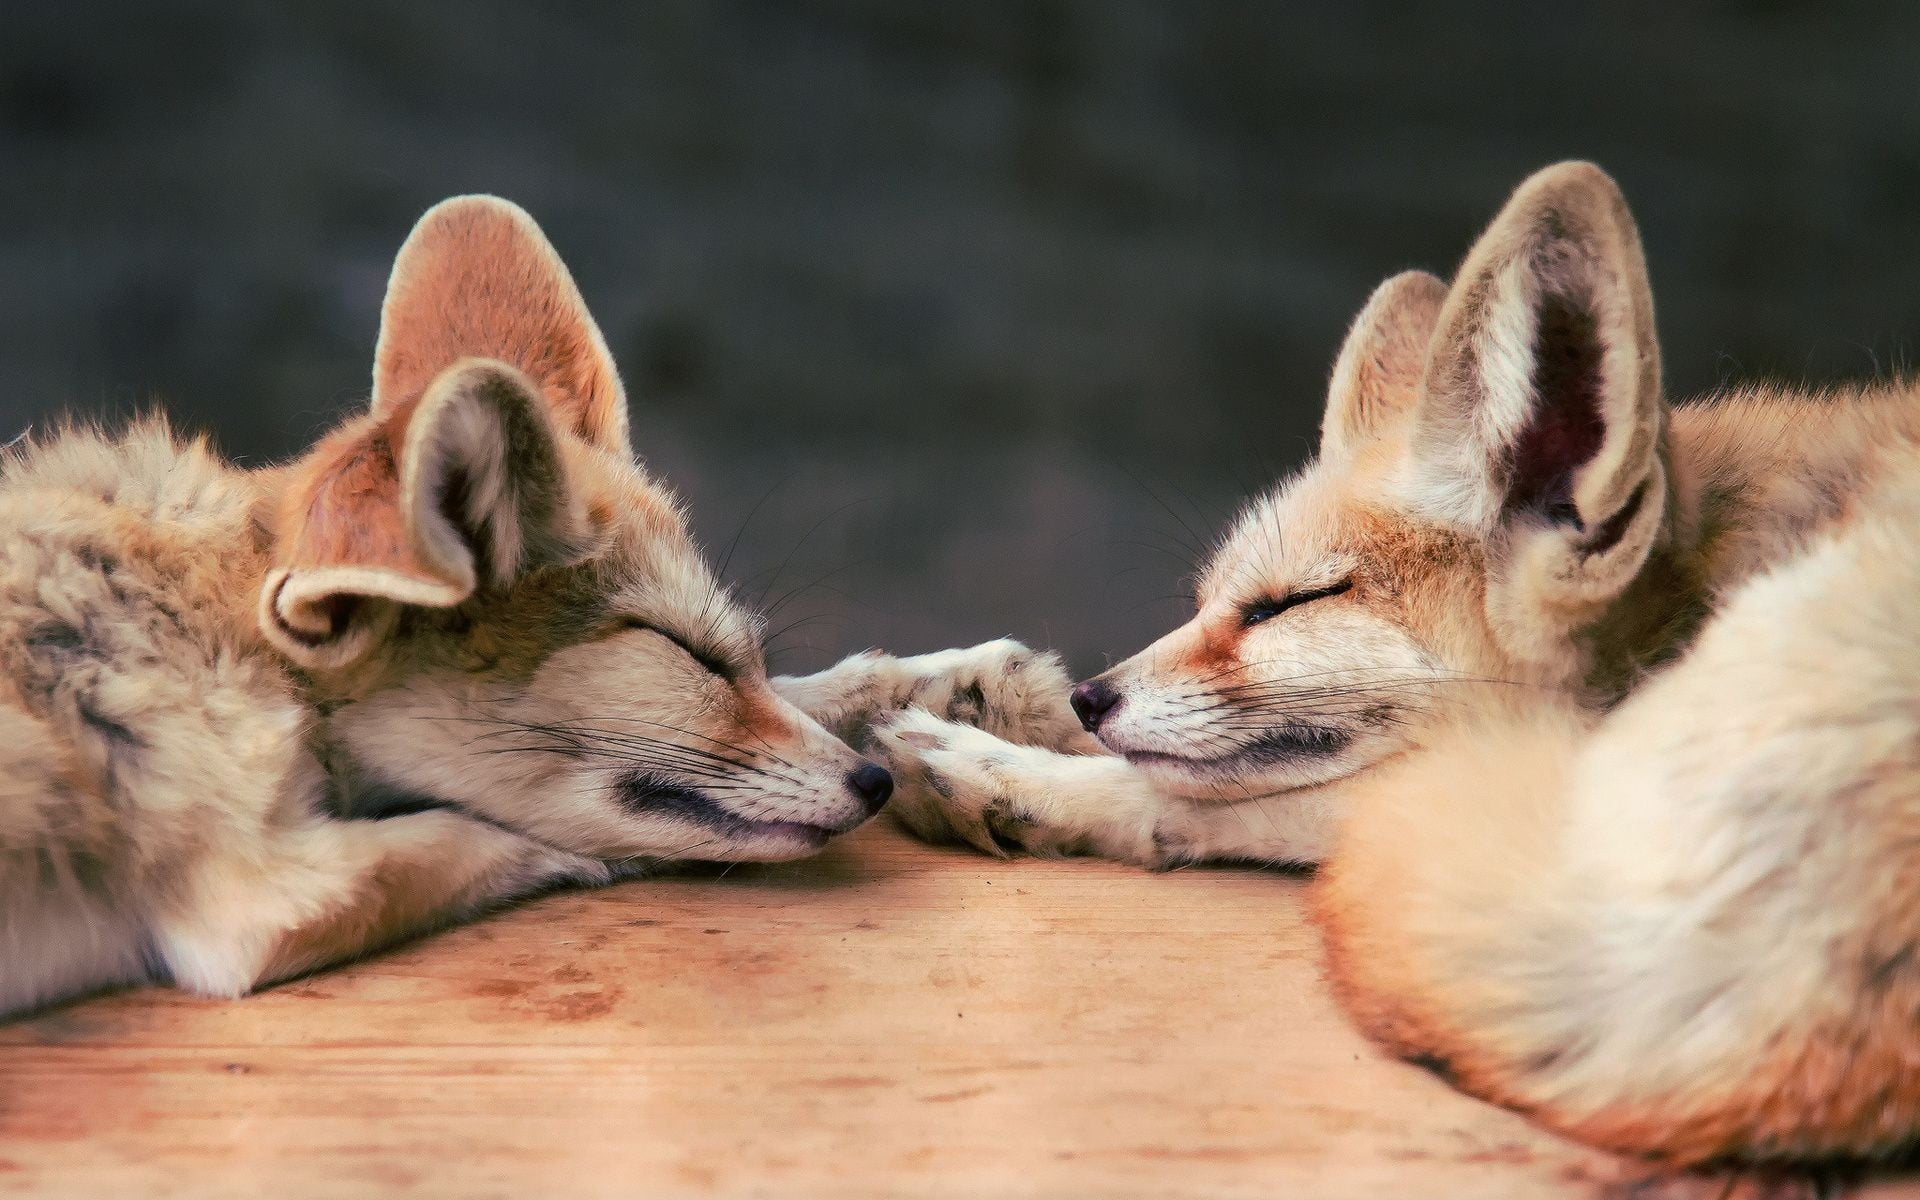 two baby red fox, baby animals, sleeping, mammal, animal themes